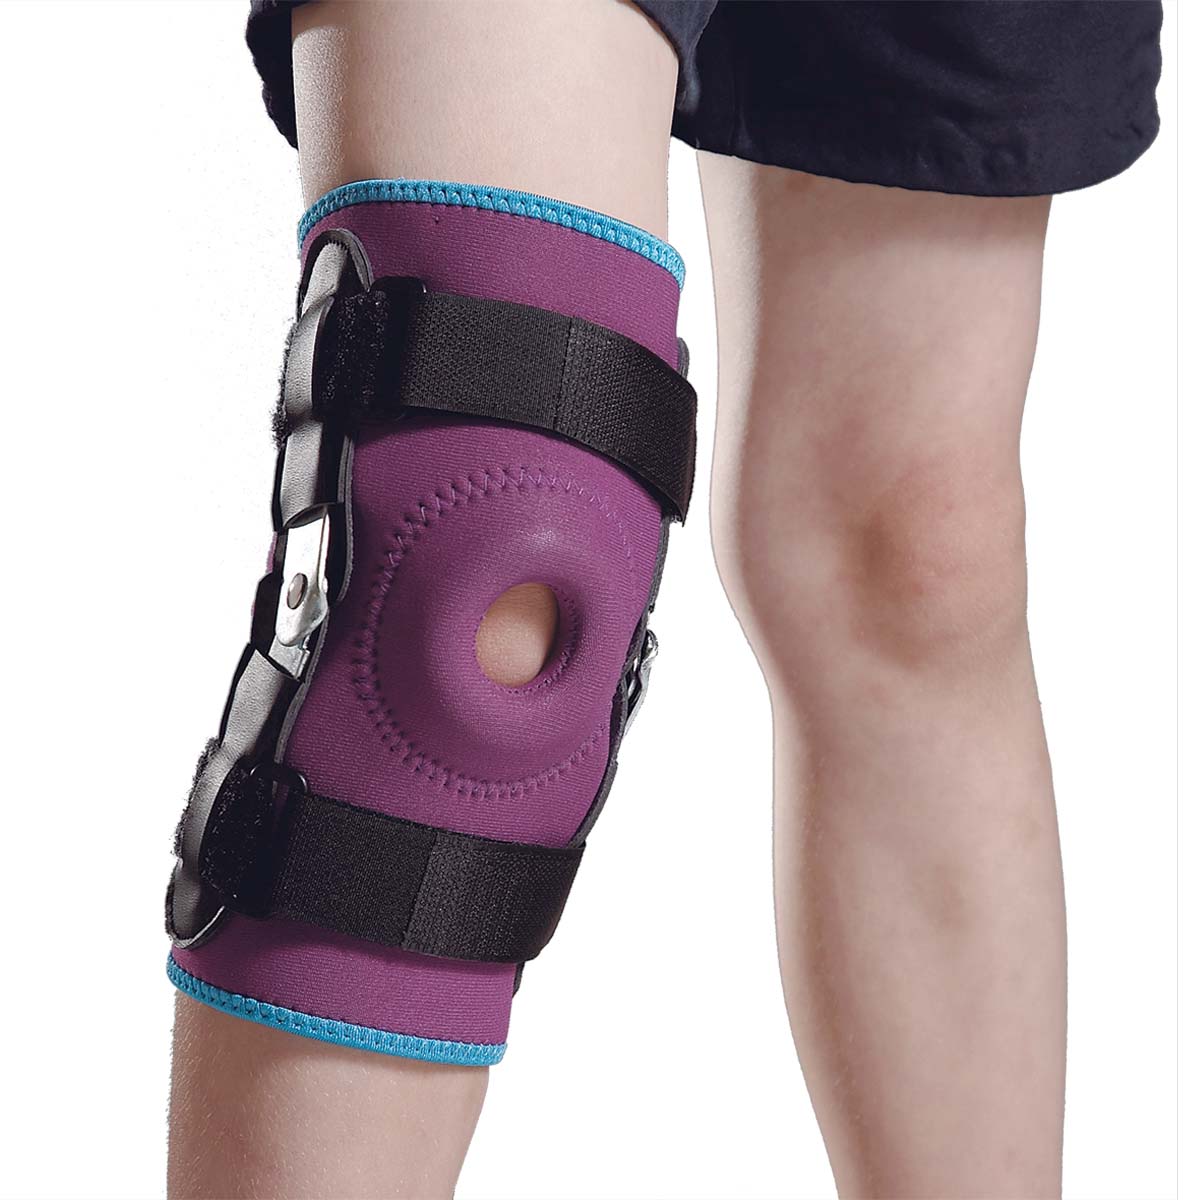 Paediatric Hinged Neoprene Knee Support - 2 sizes available - Medigenix